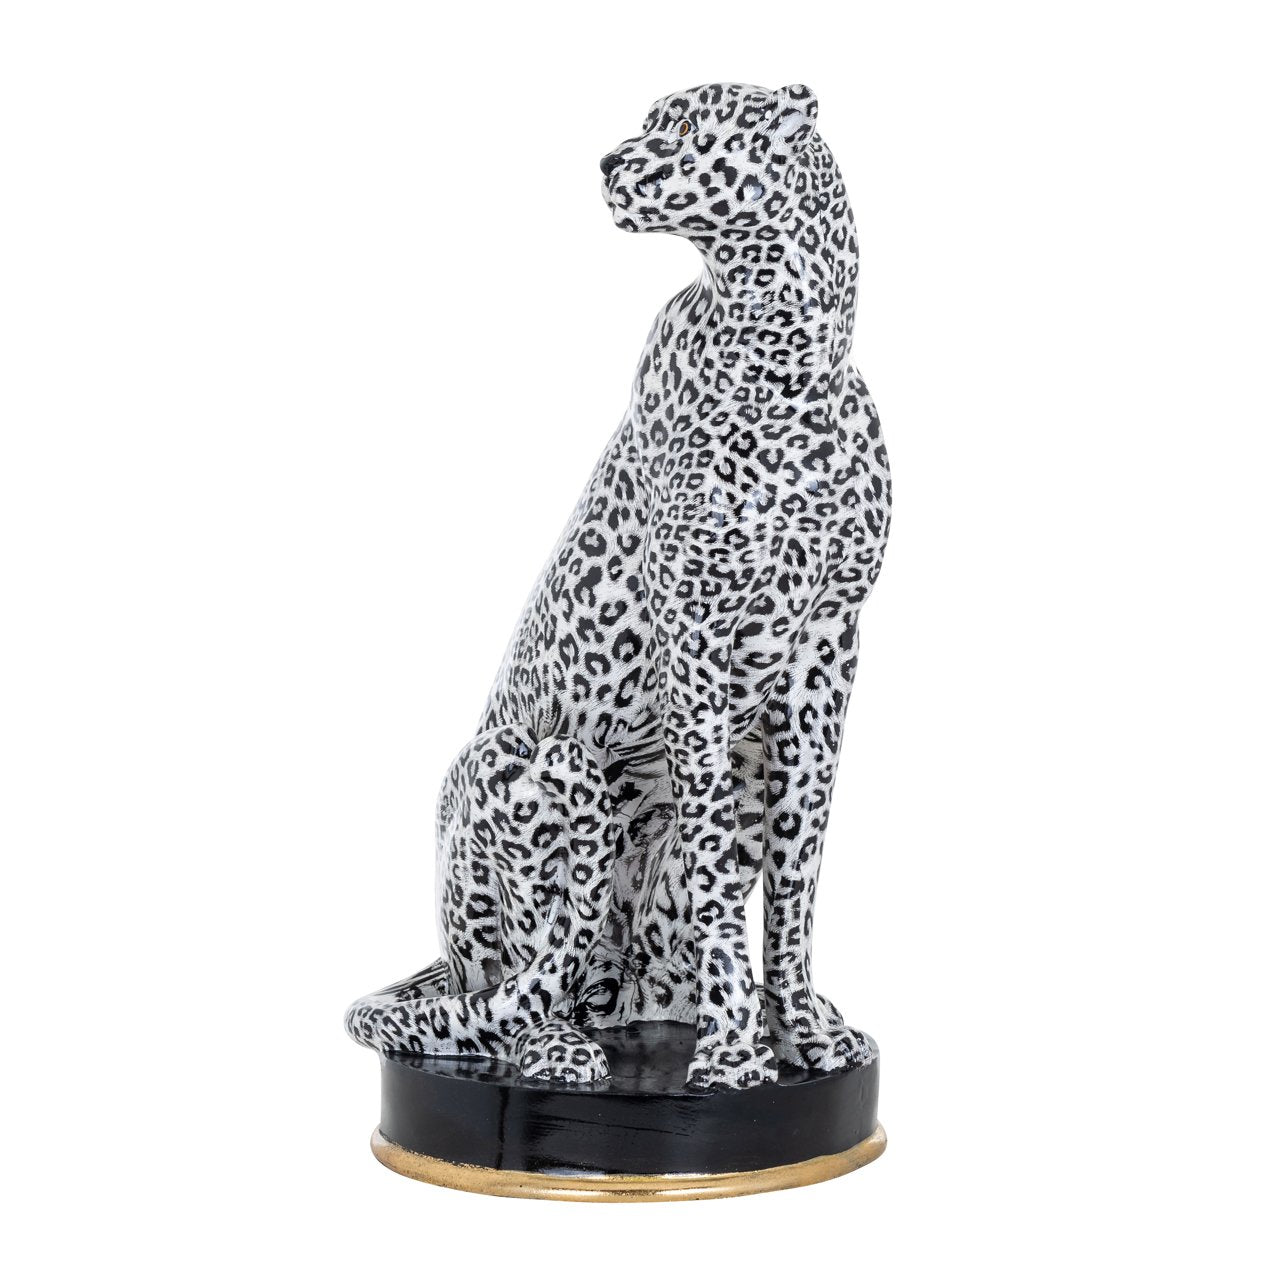 Zwart-wit decoratief jachtluipaard sculptuur | H. 53 cm